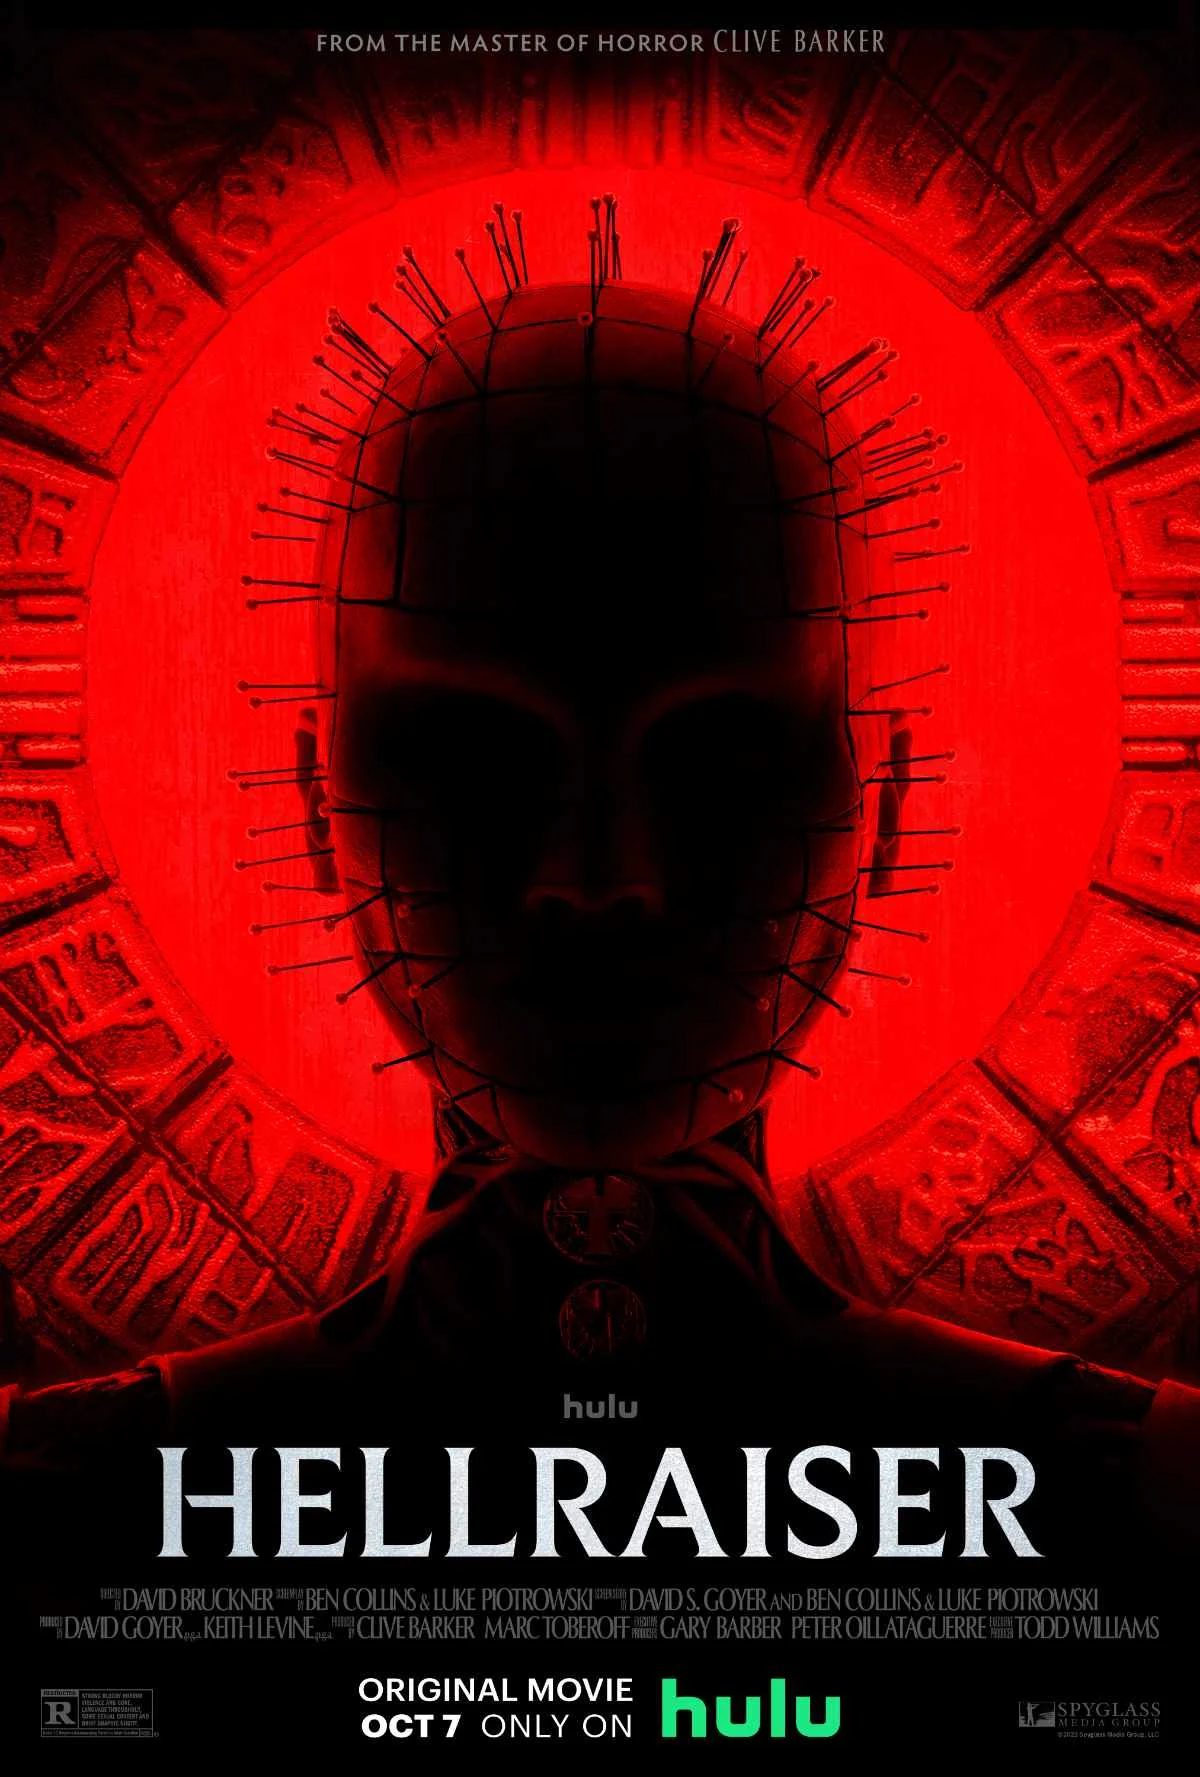 Hellraiser Cast and Crew